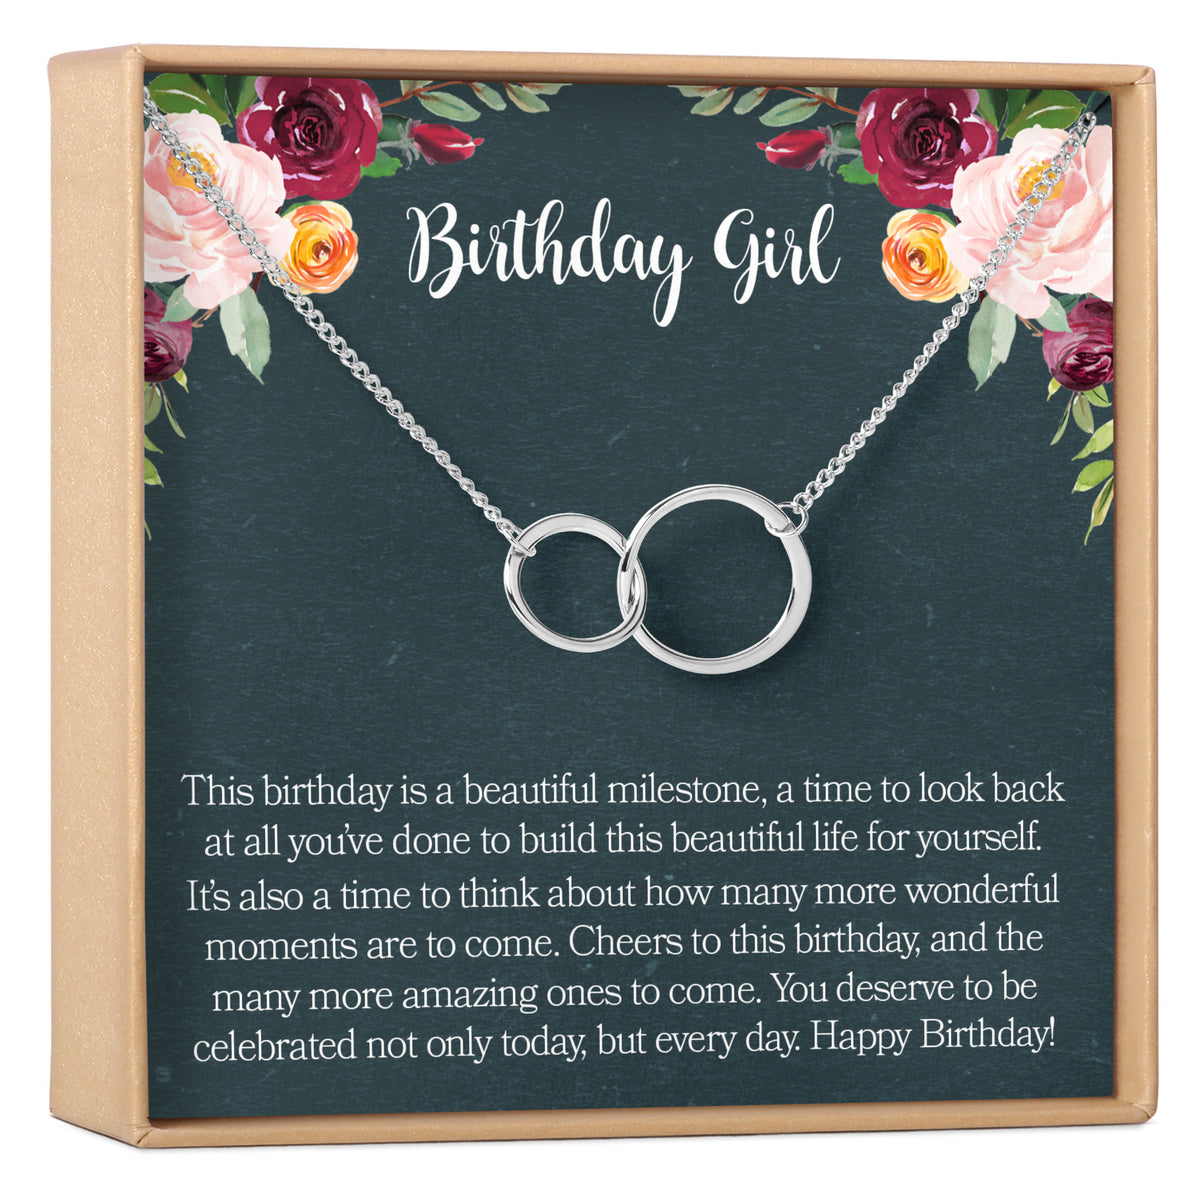 Birthday Gifts for Girls